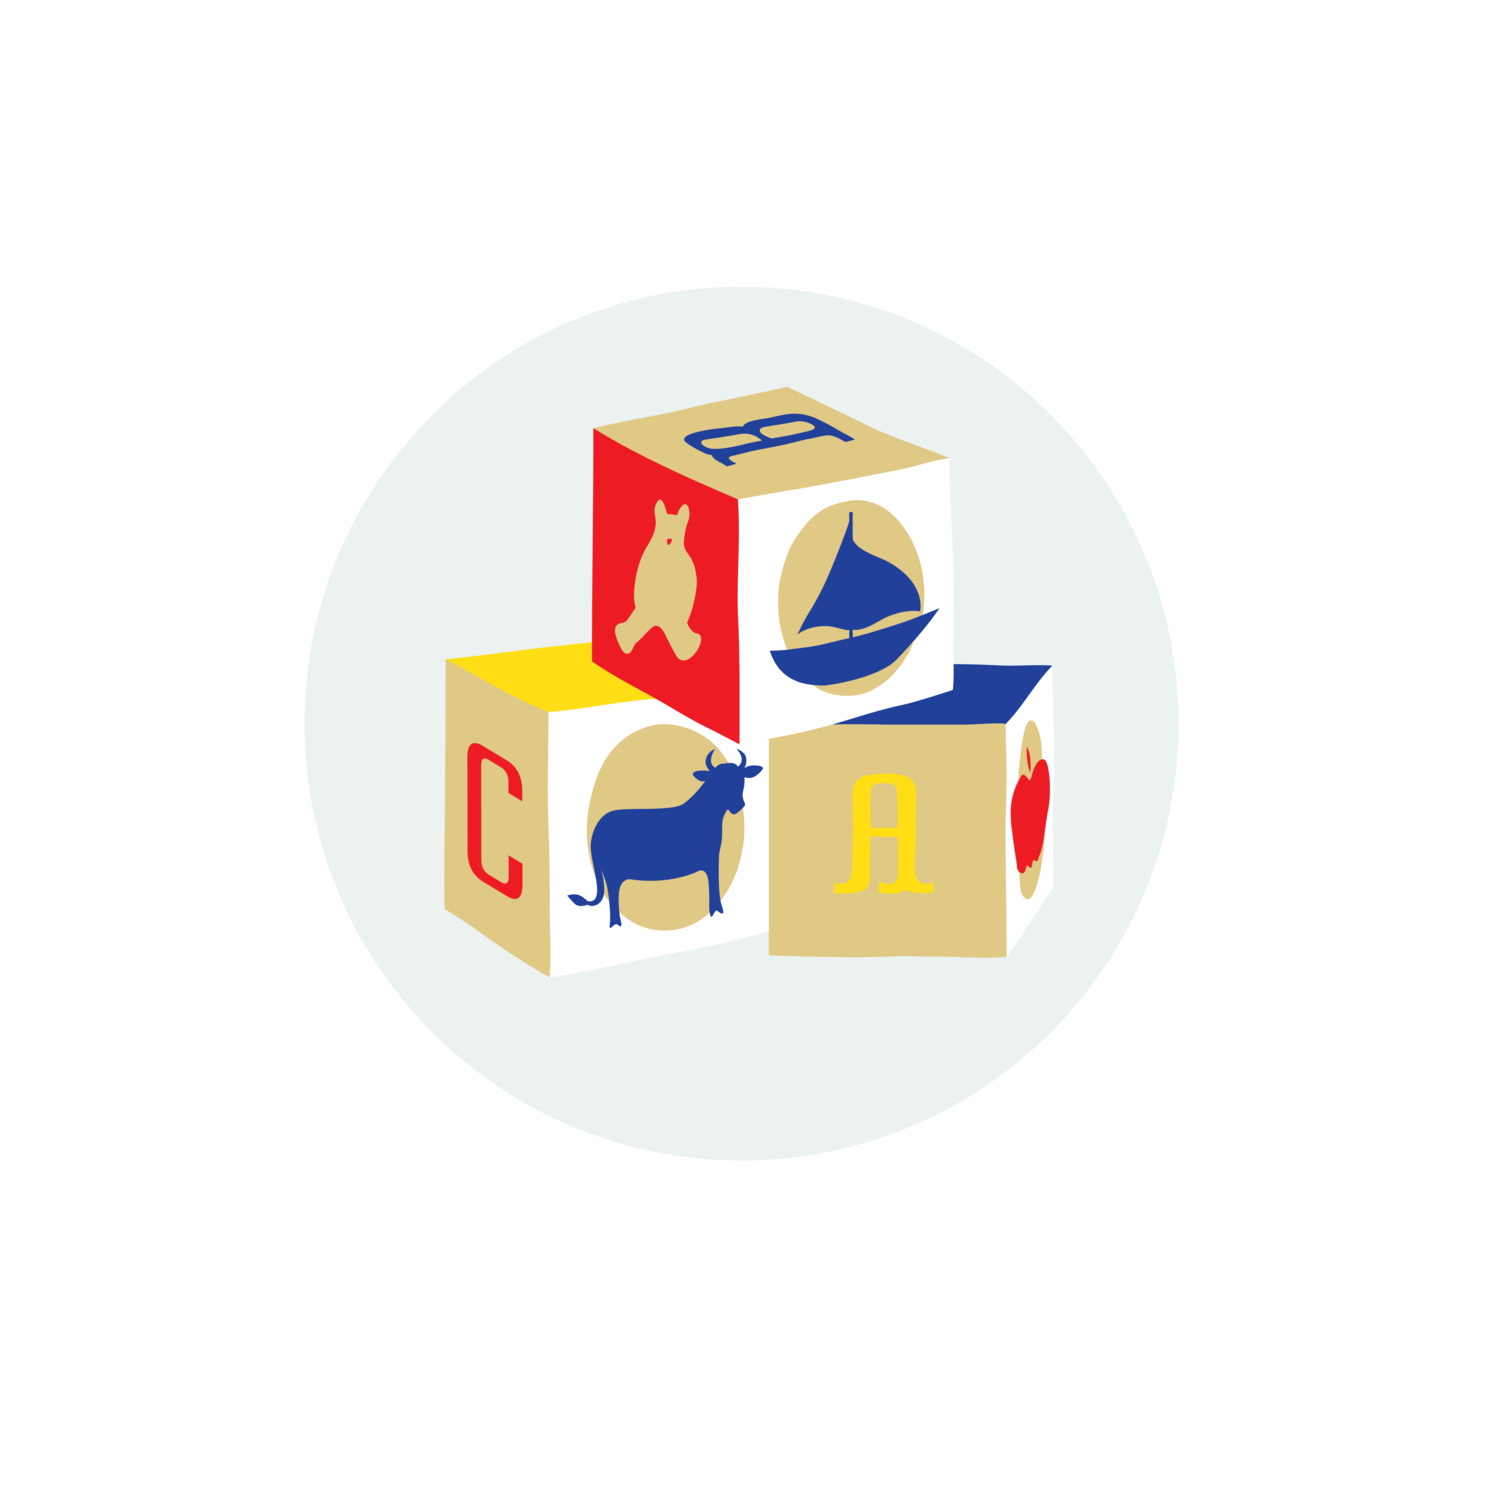 Building Blocks Nursery School